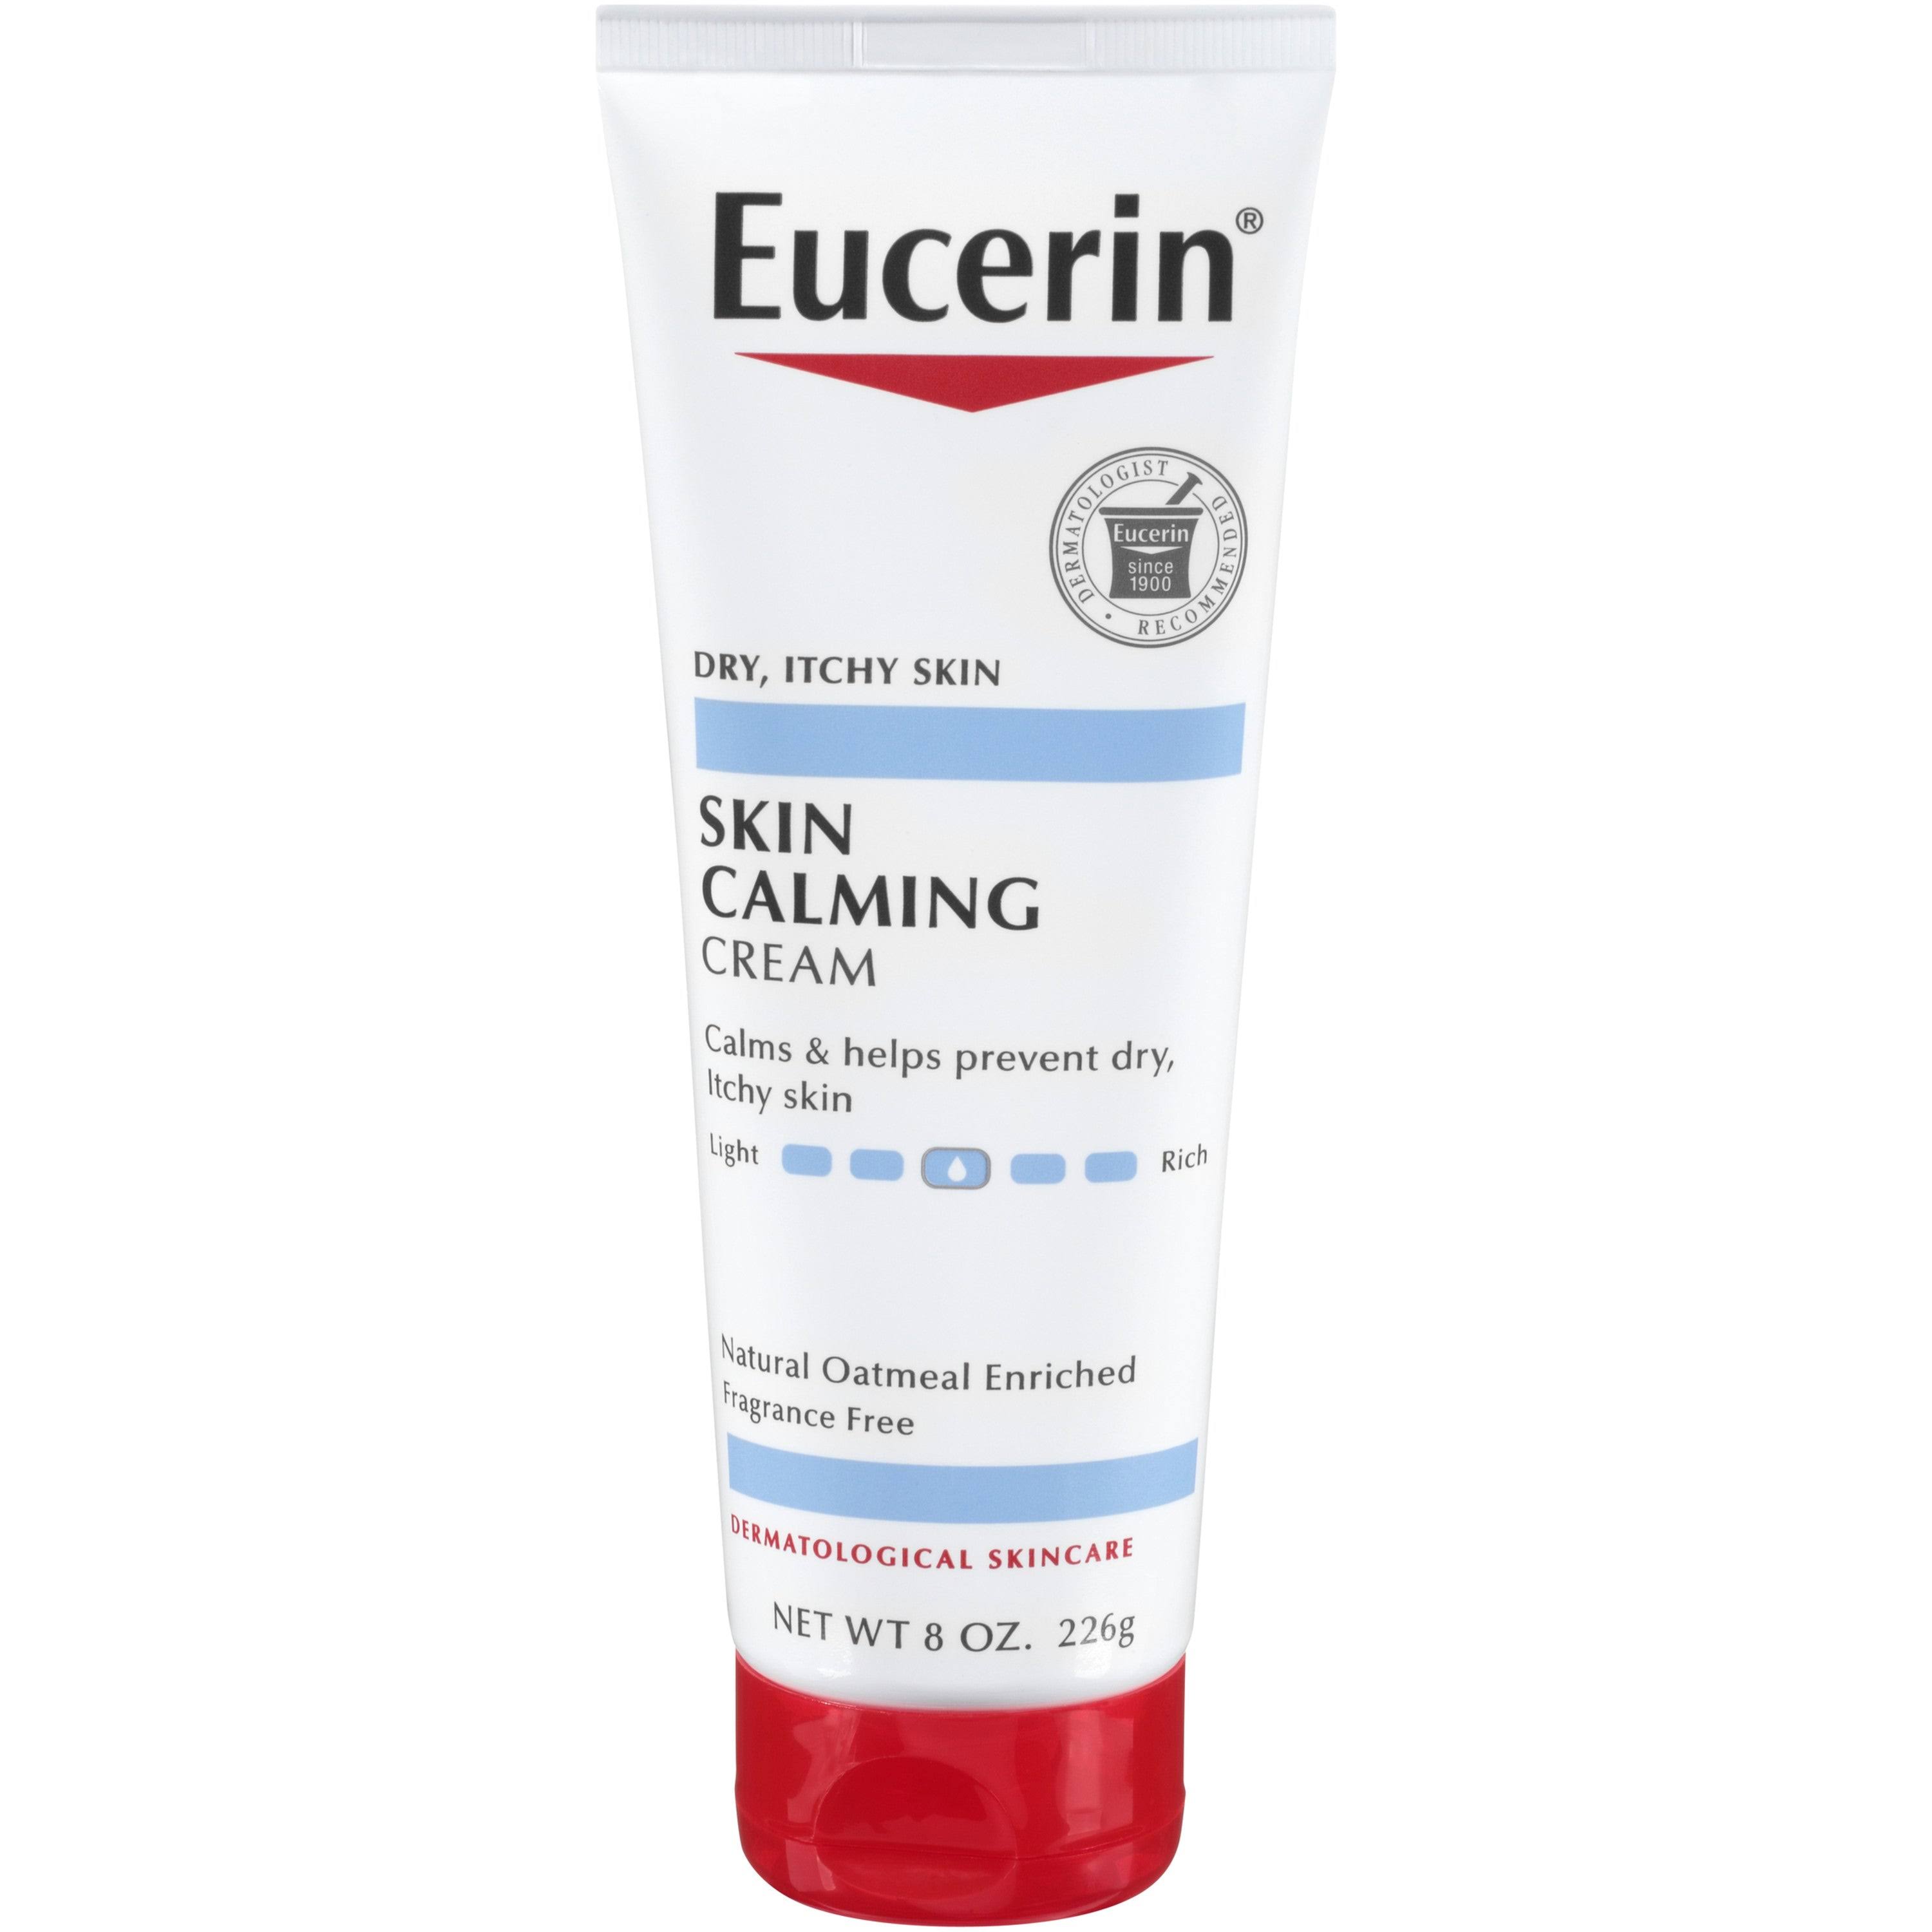 Eucerin Skin Calming Daily Moisturizing Creme - 8oz